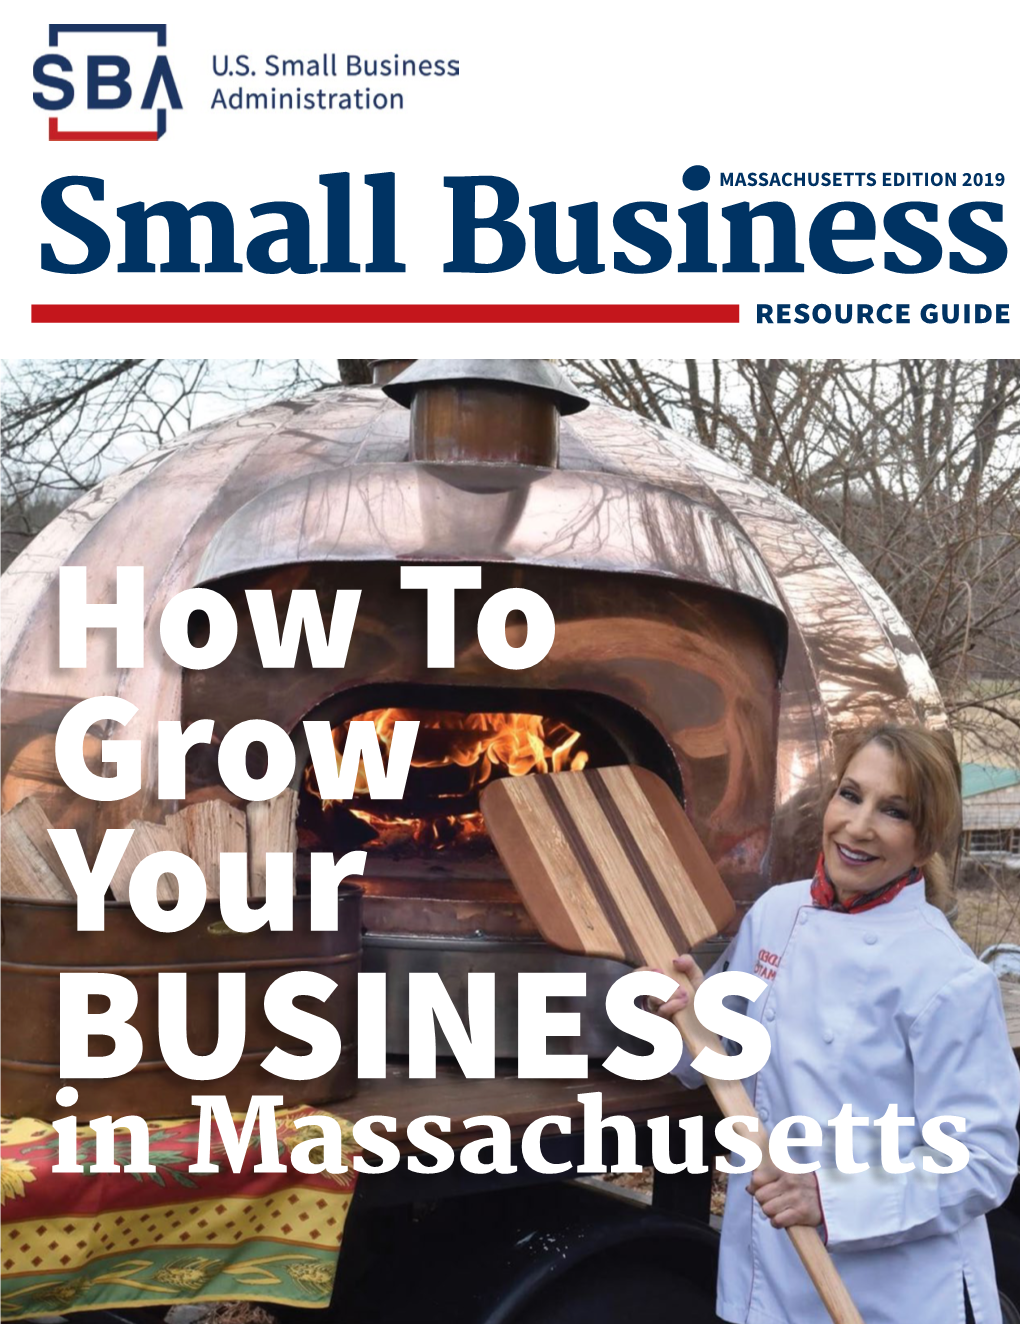 SBA's Massachusetts Small Business Resource Guide